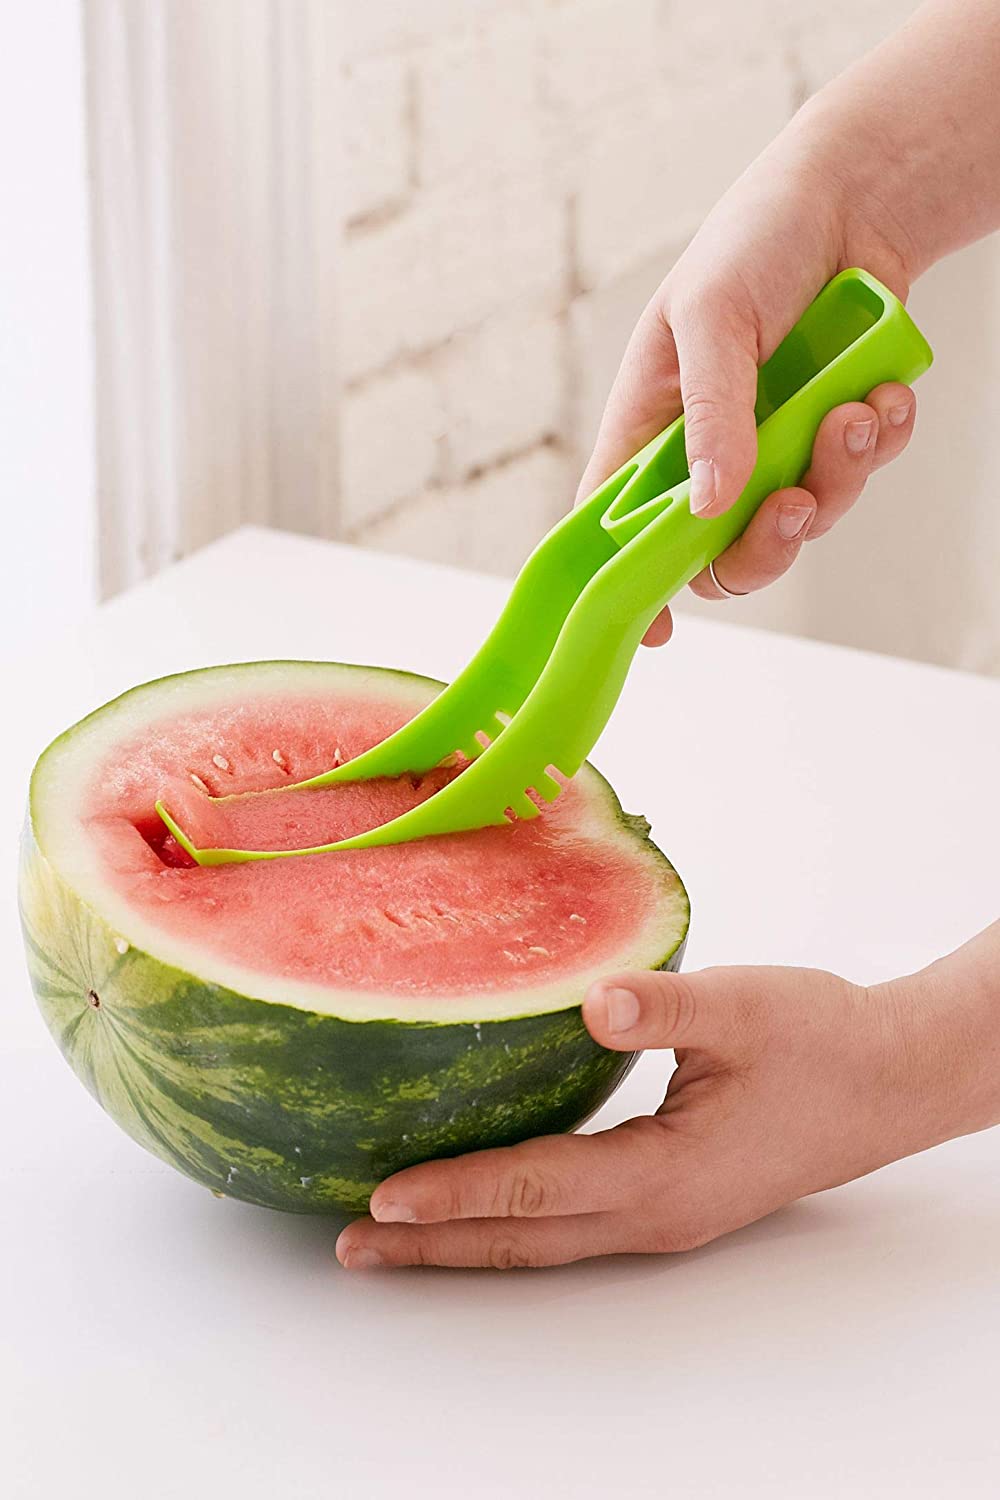 2047 Plastic Watermelon Cutter Slicer - SkyShopy